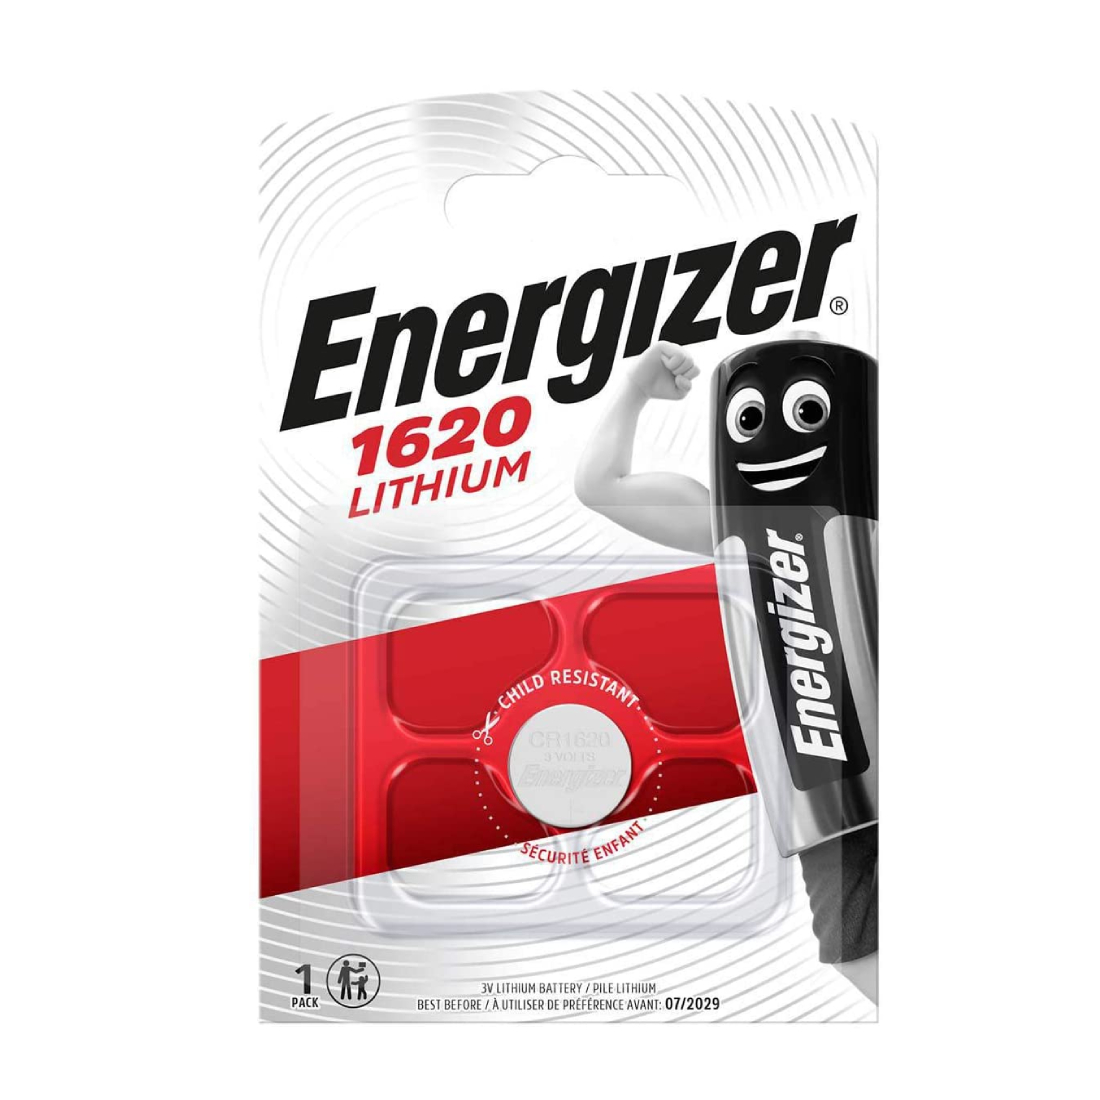 Energizer 3V Lithium Battery - CR1620